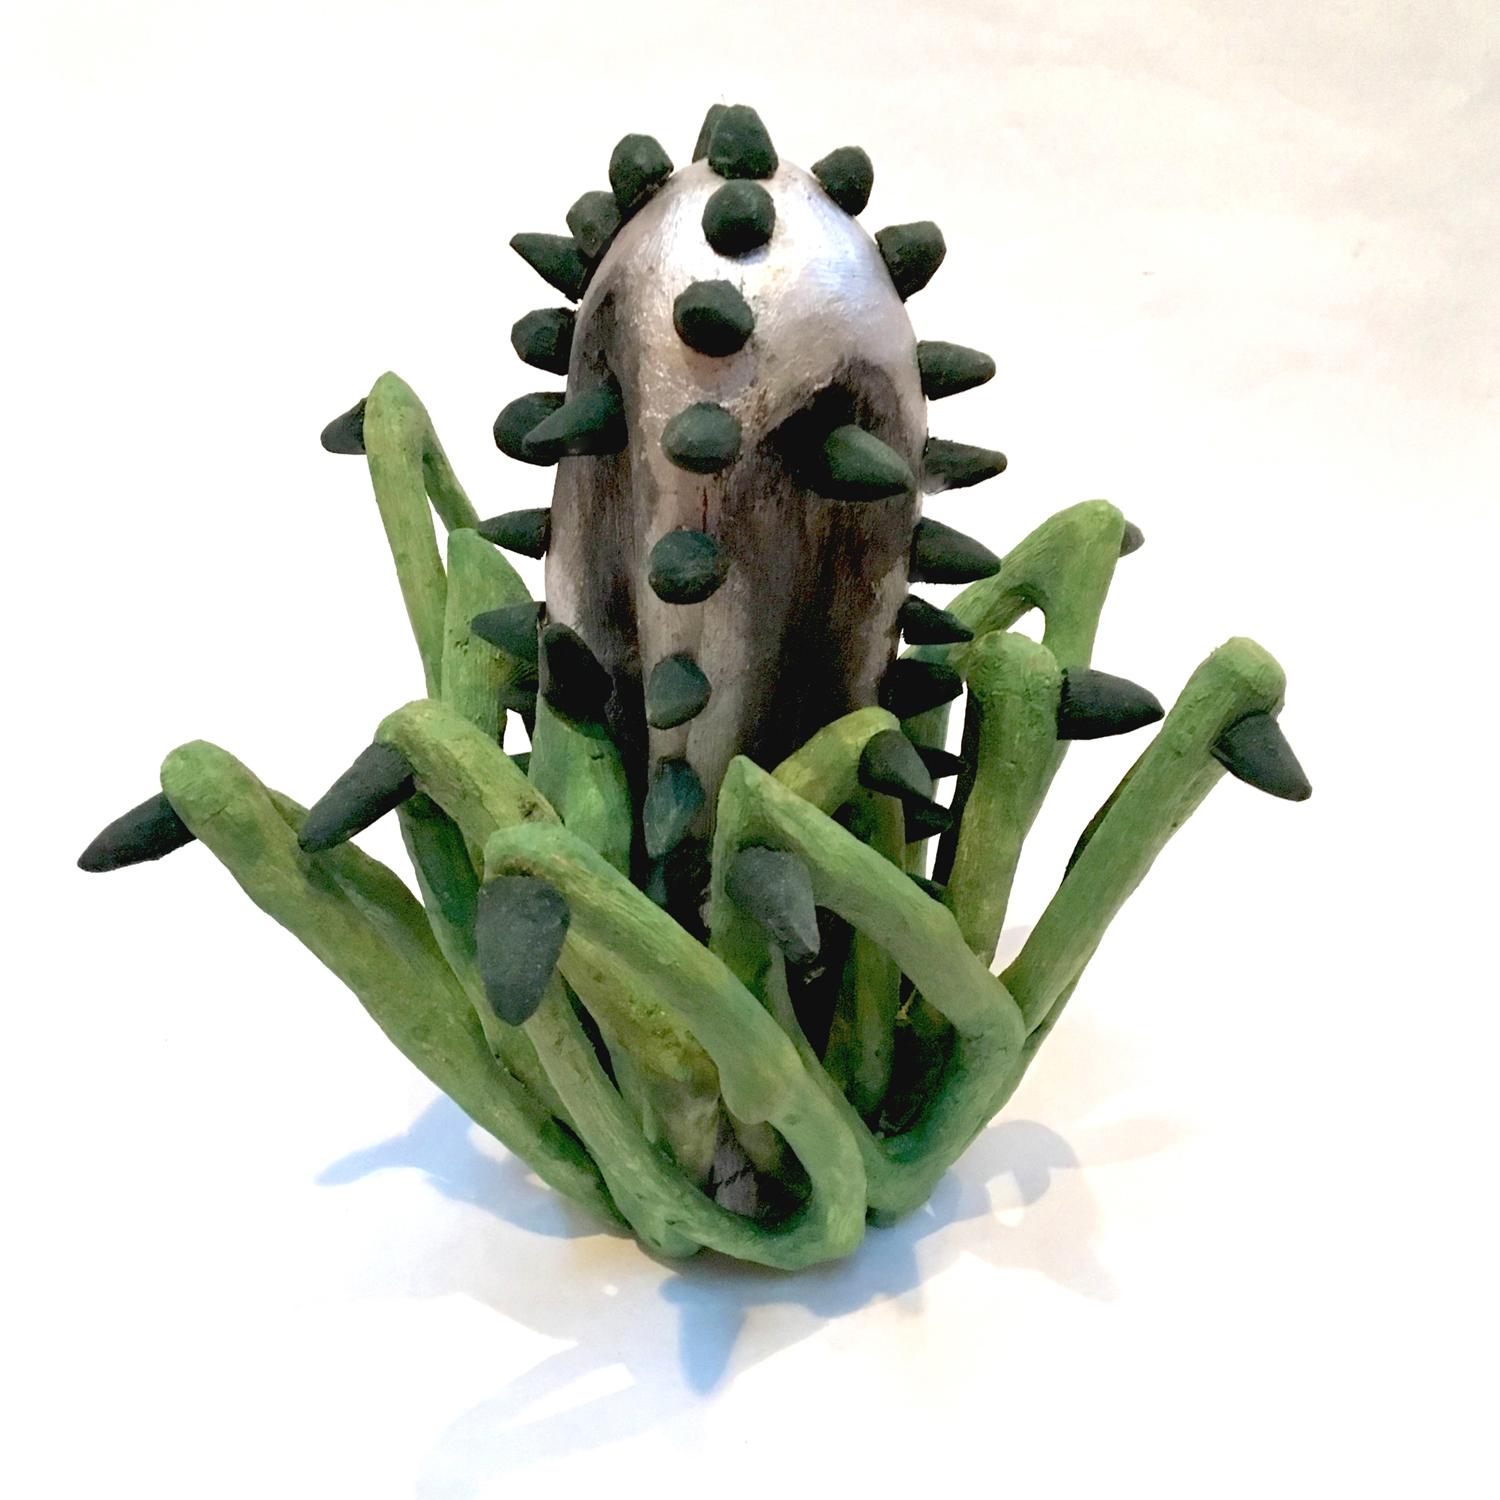 Loren Eiferman Still-Life Sculpture - Carbon Capture, recycled wood plant sculpture